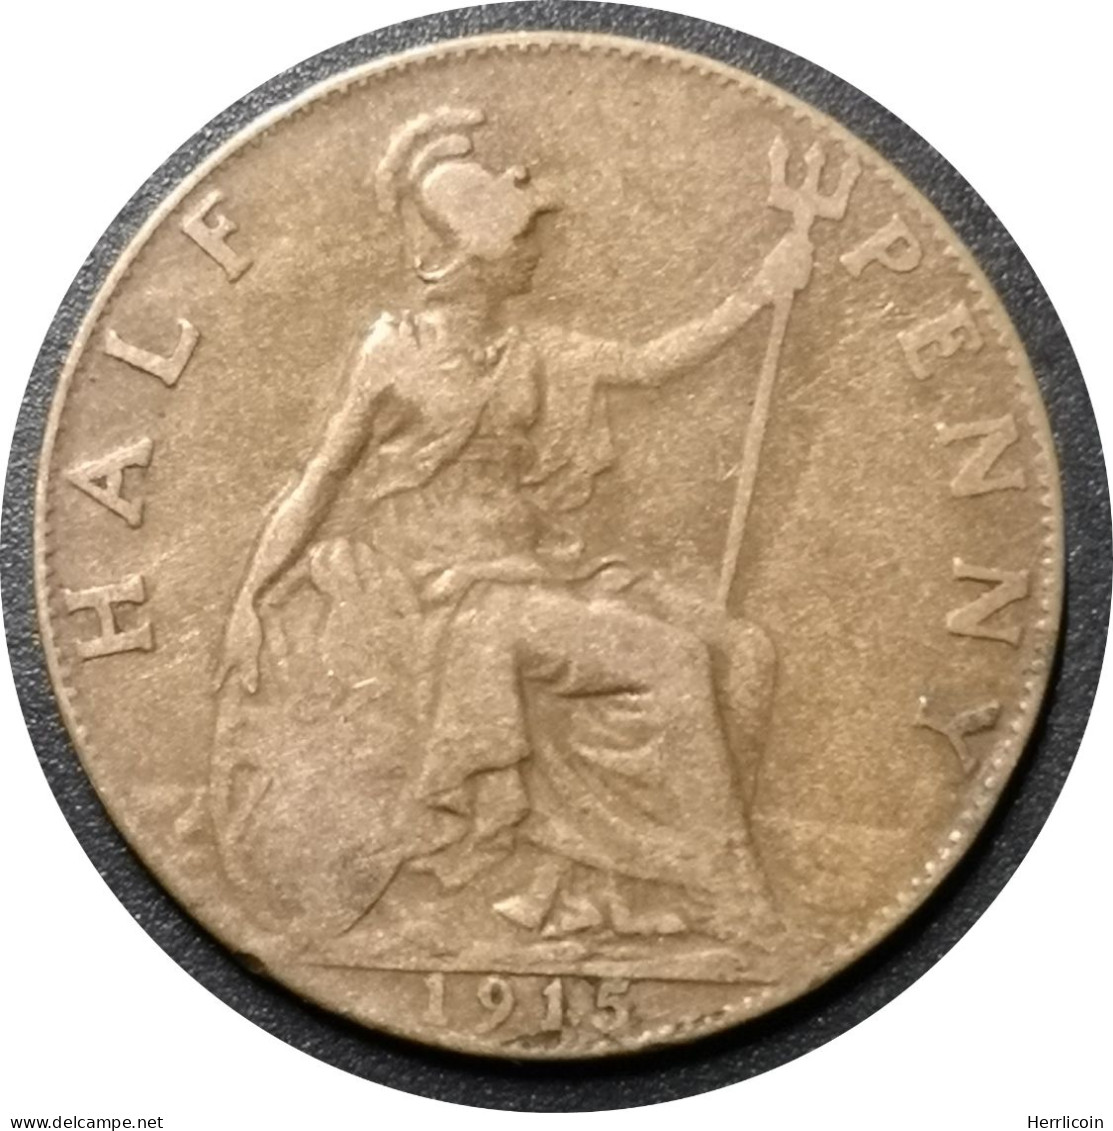 Monnaie Royaume Uni - 1915 - Half Penny George V 1re Effigie, Large Tête - C. 1/2 Penny